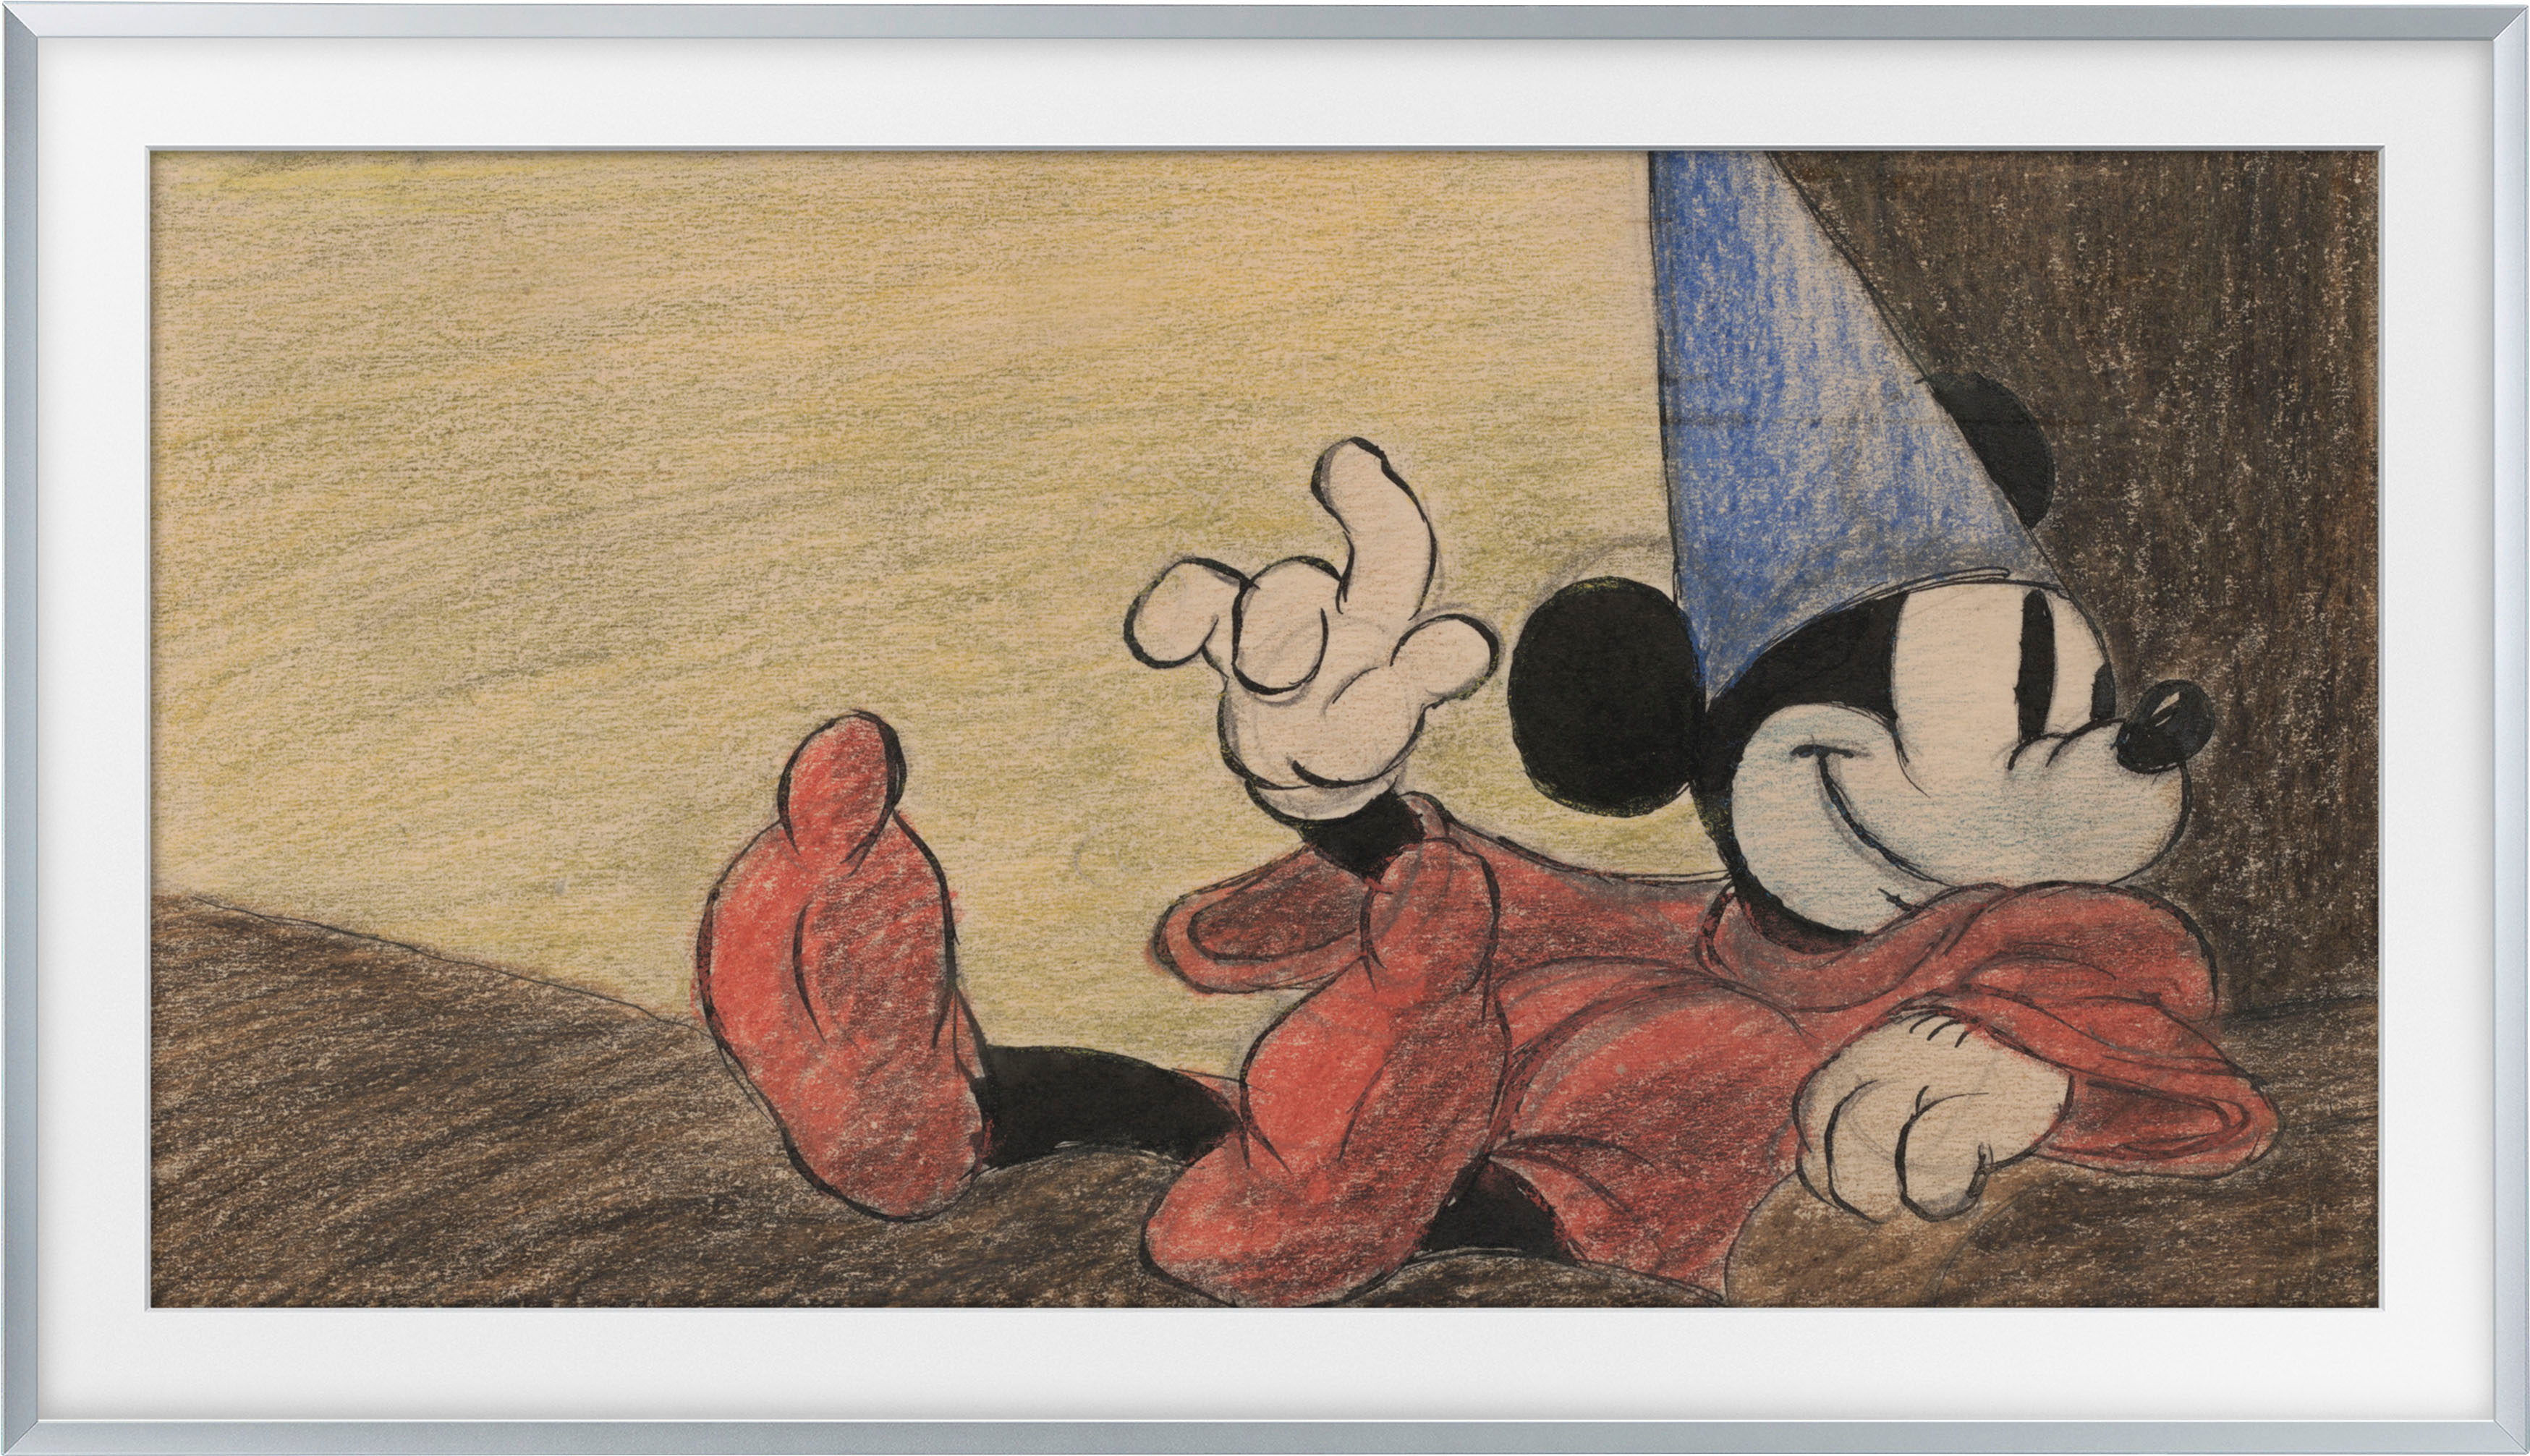 Shop Disney Paintings, Prints, and more  Disney Art On Main – Disney Art  On Main Street